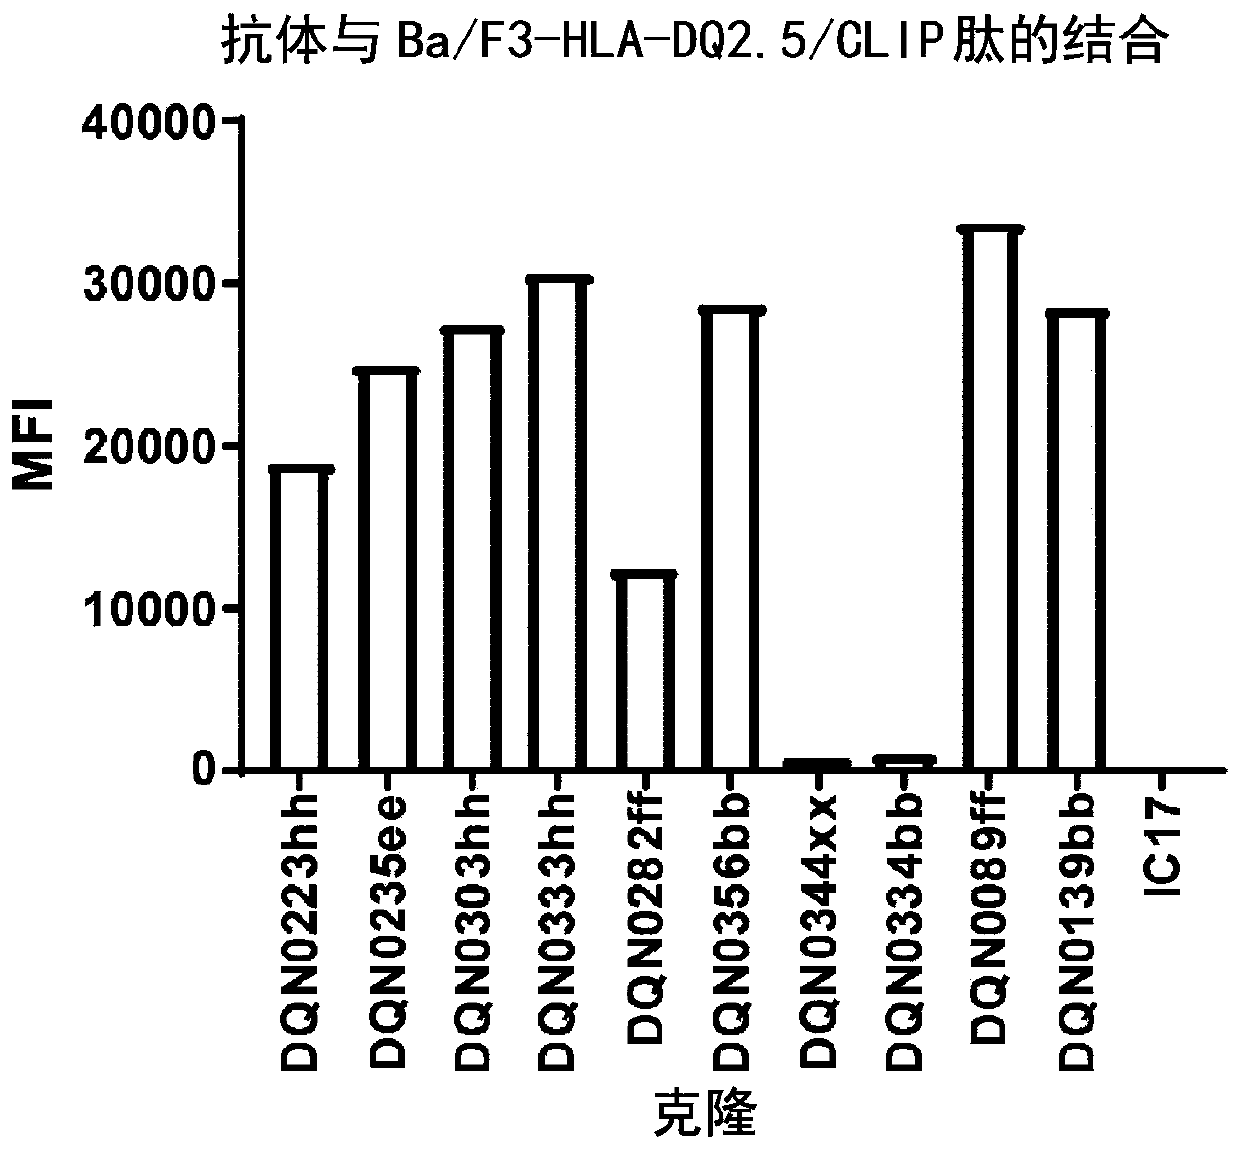 Anti-hla-dq2.5 antibody